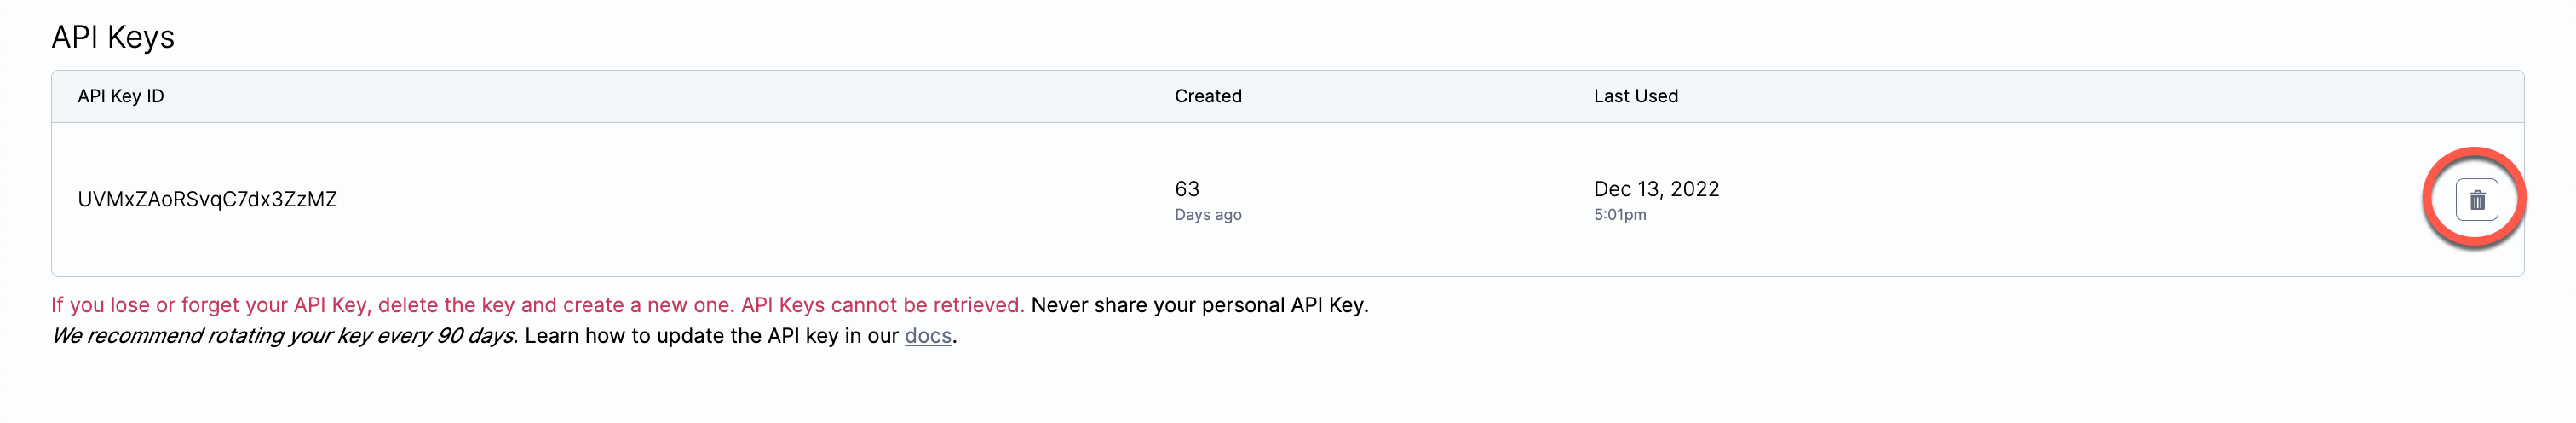 Delete API Key